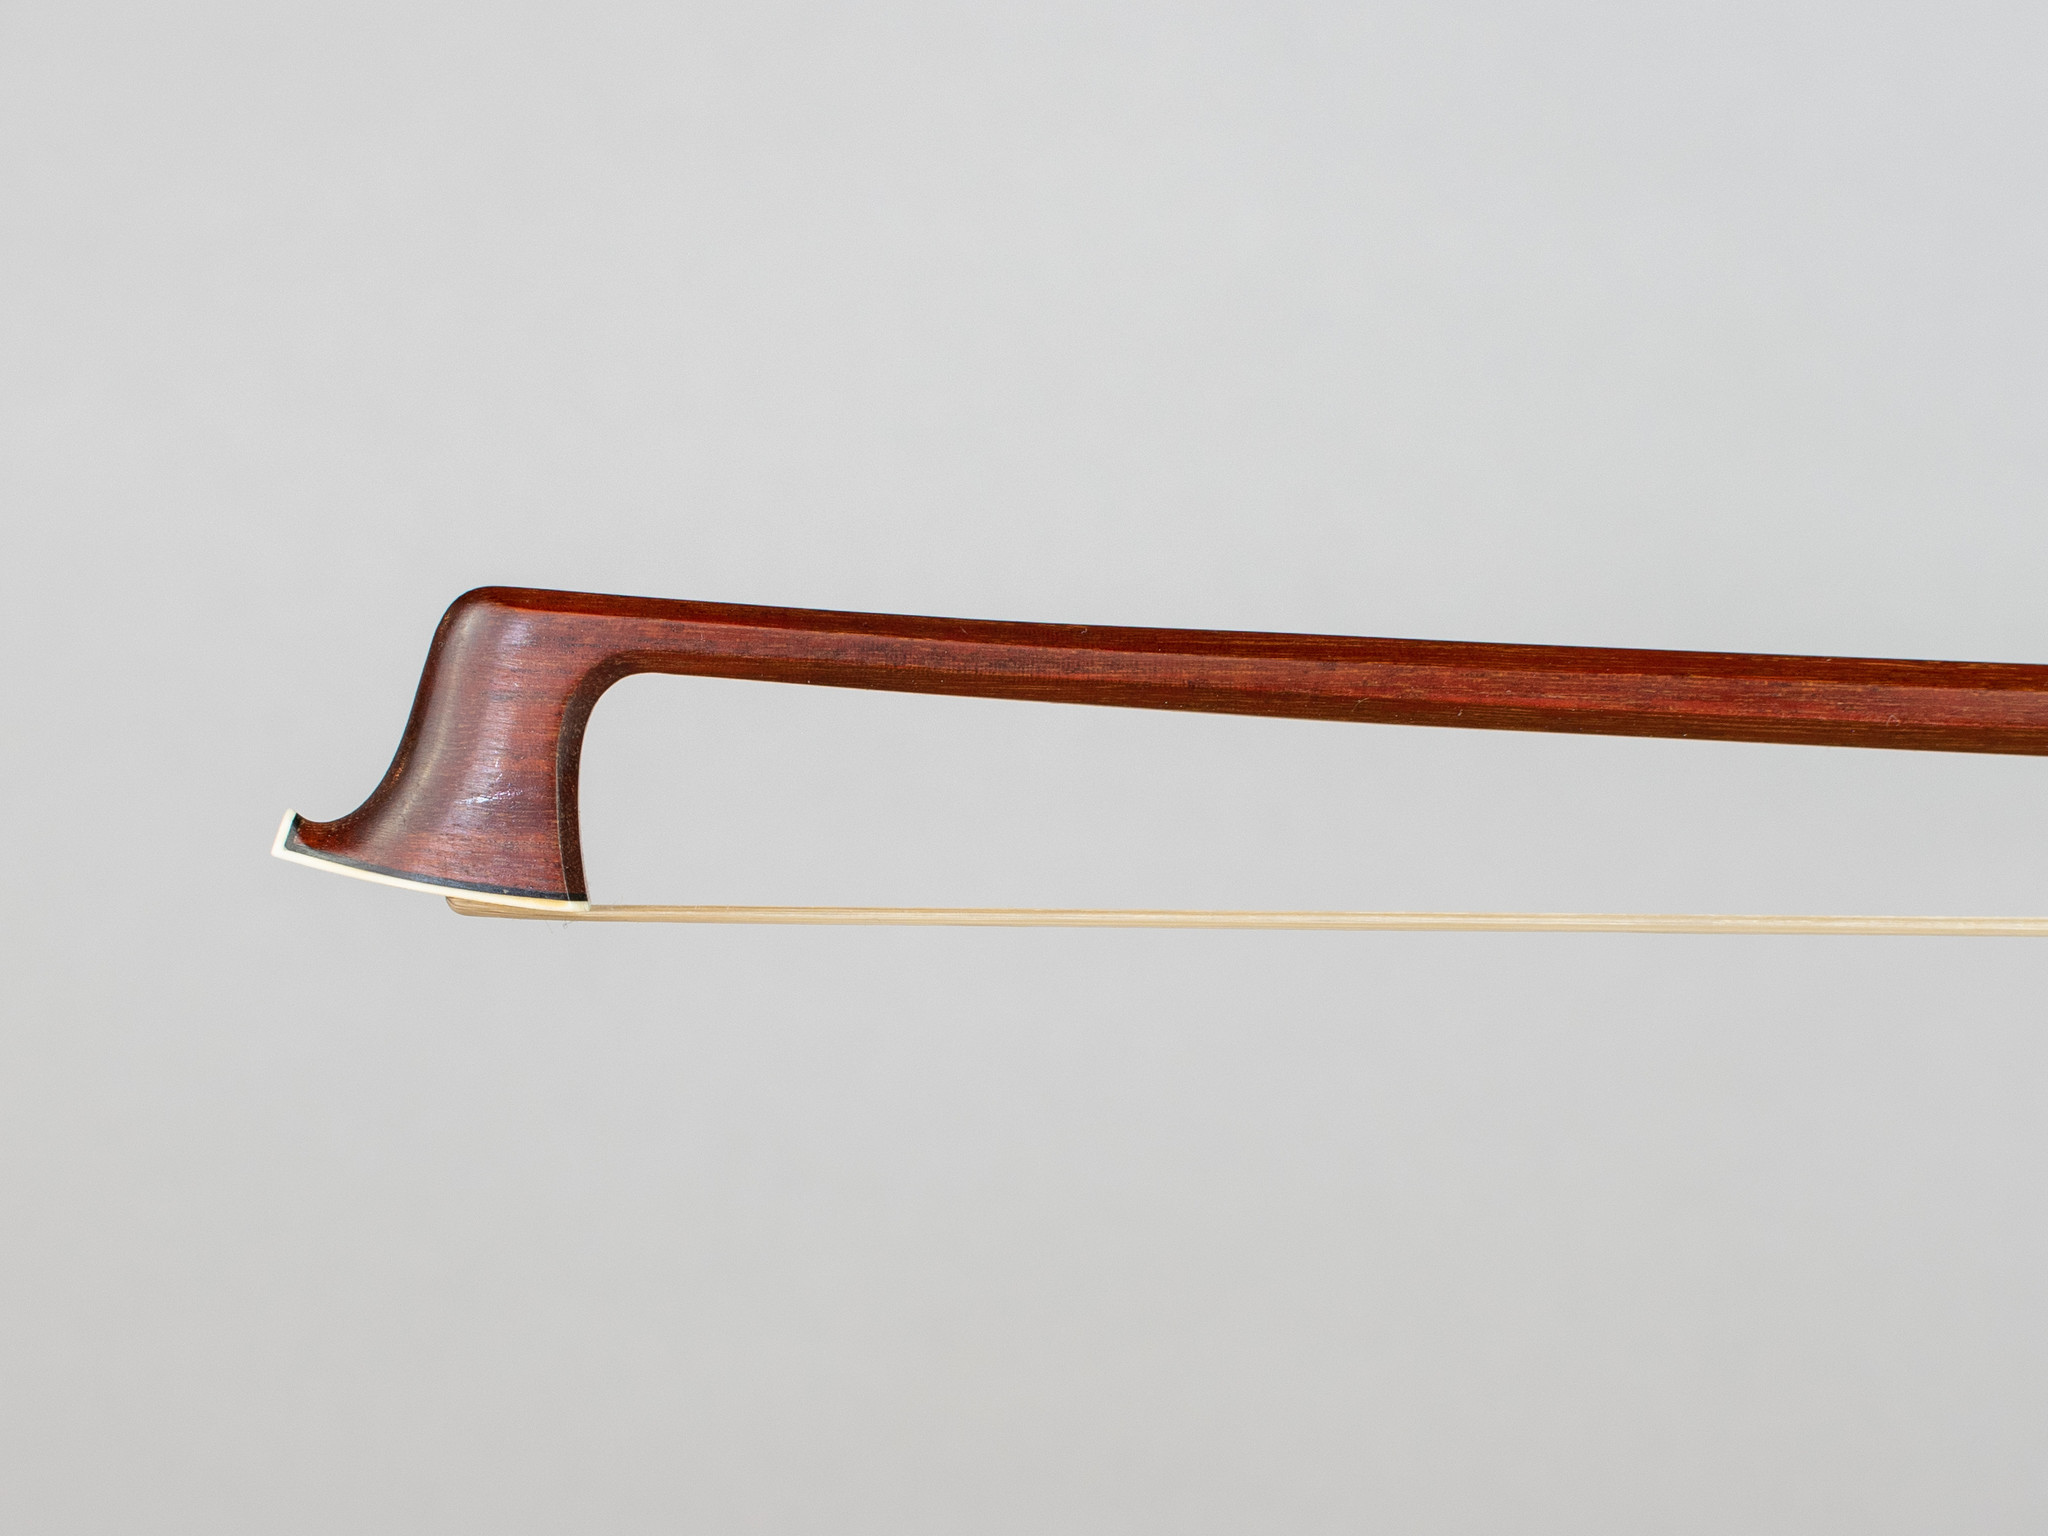 Richard Grunke violin bow, silver-mounted, Germany, 59.1g